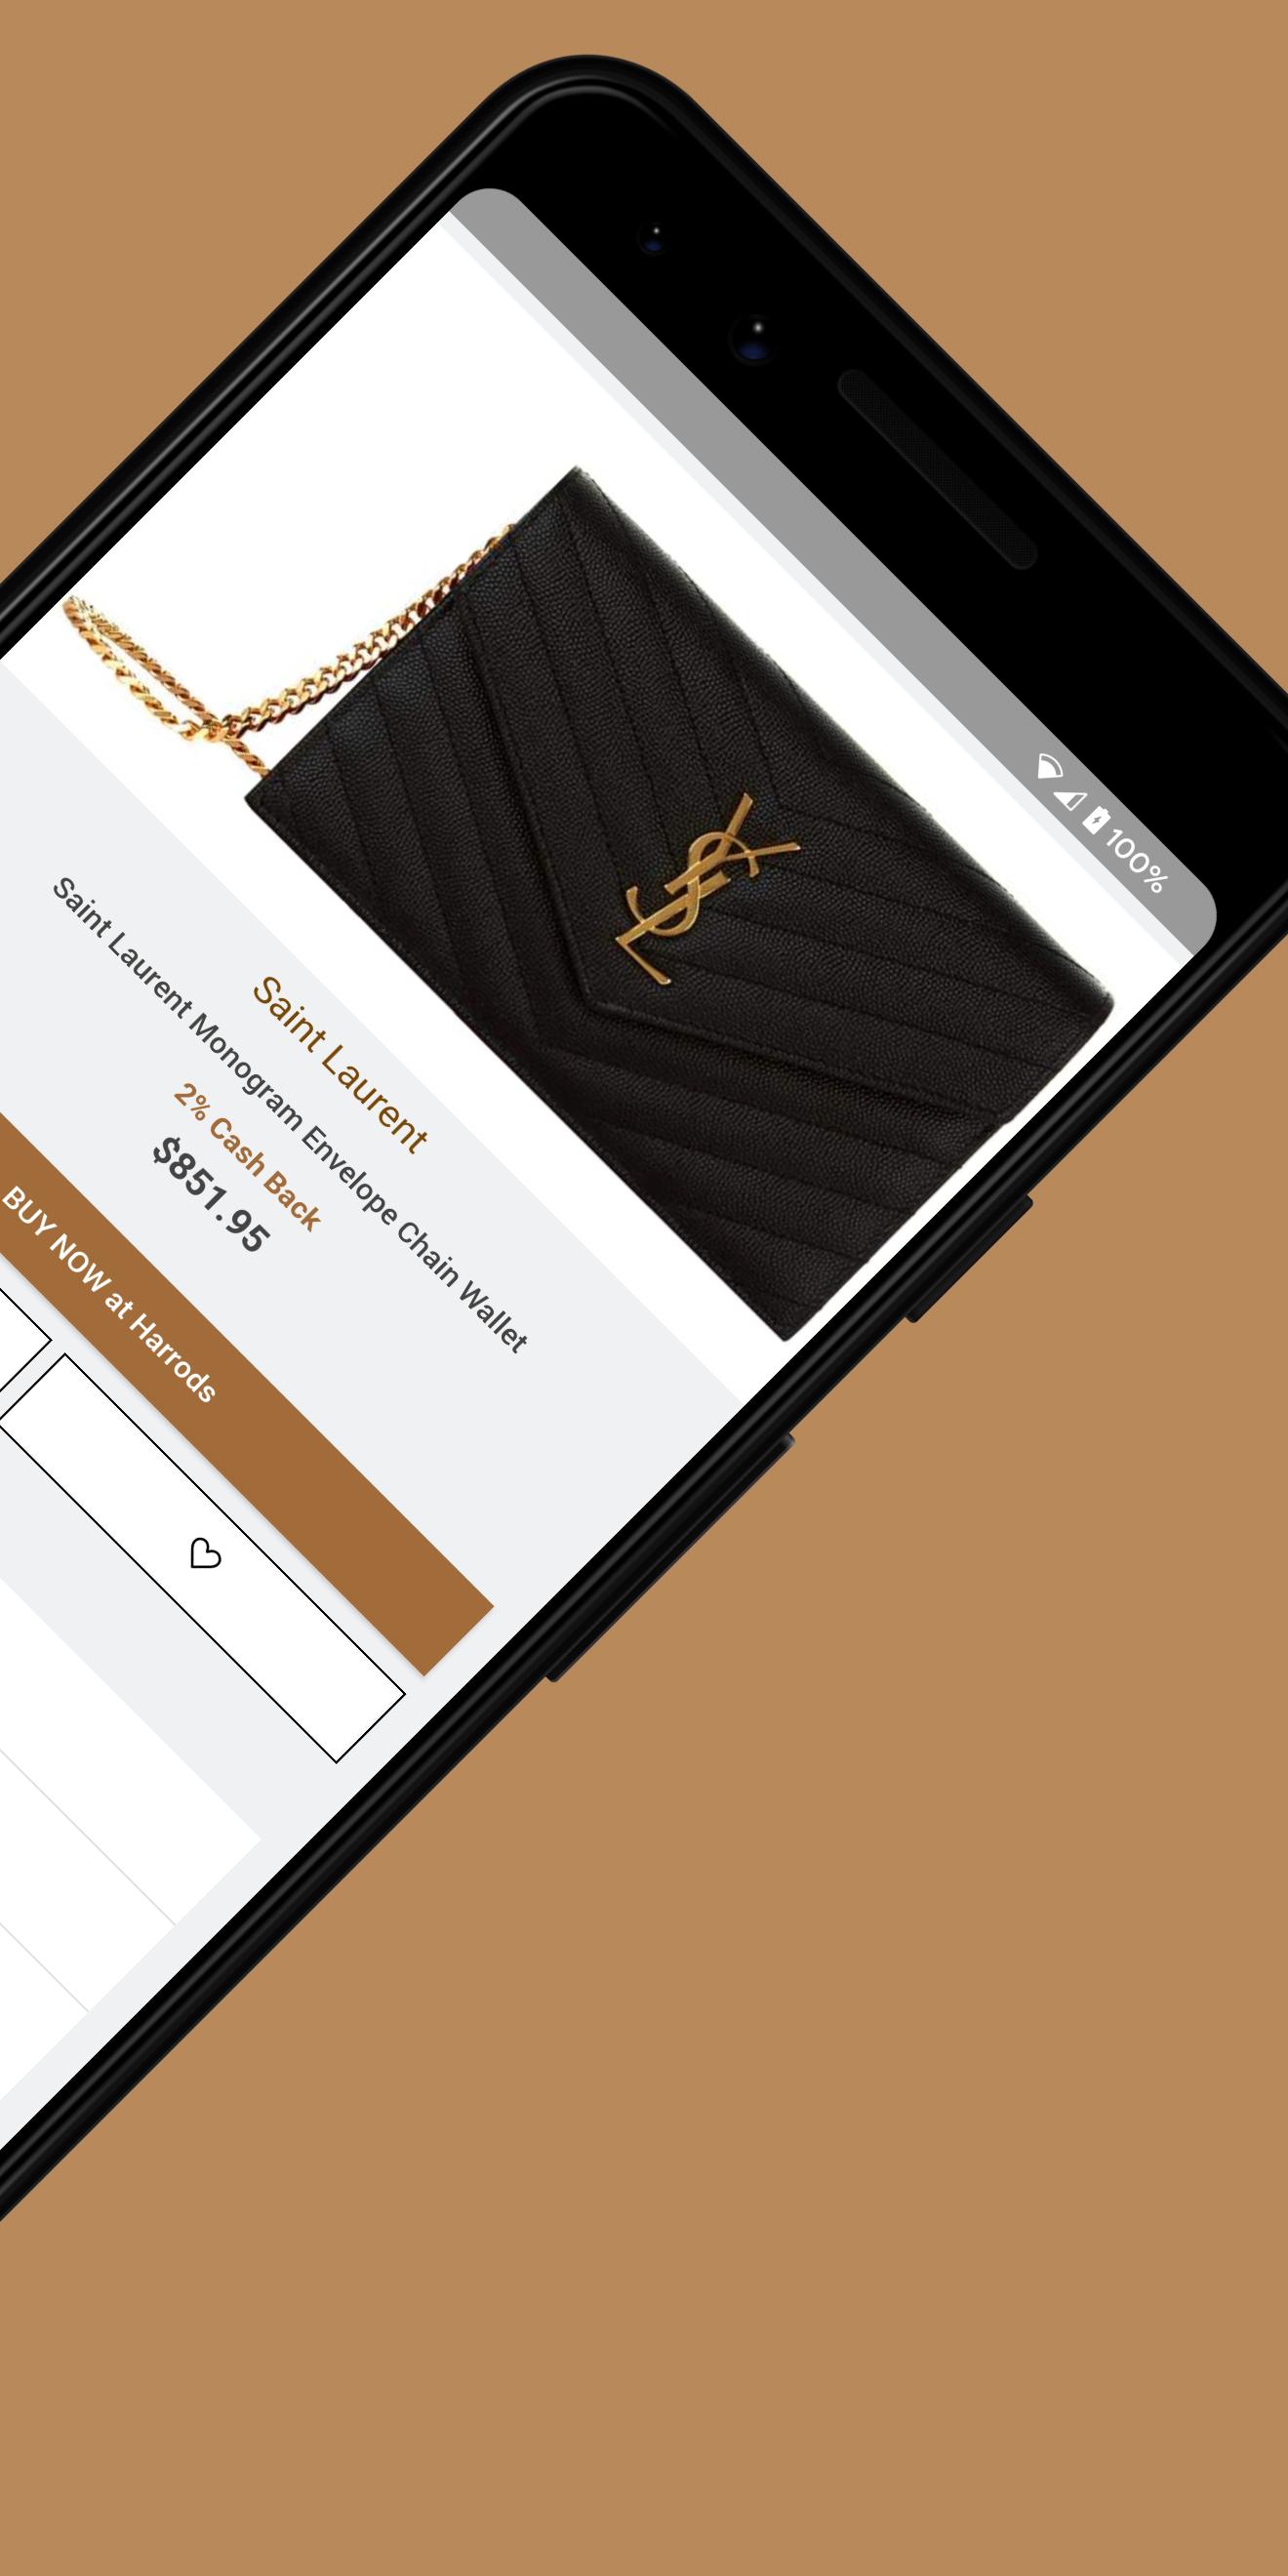 ShopStyle Fashion & Cash Back 8.0.2 Screenshot 2